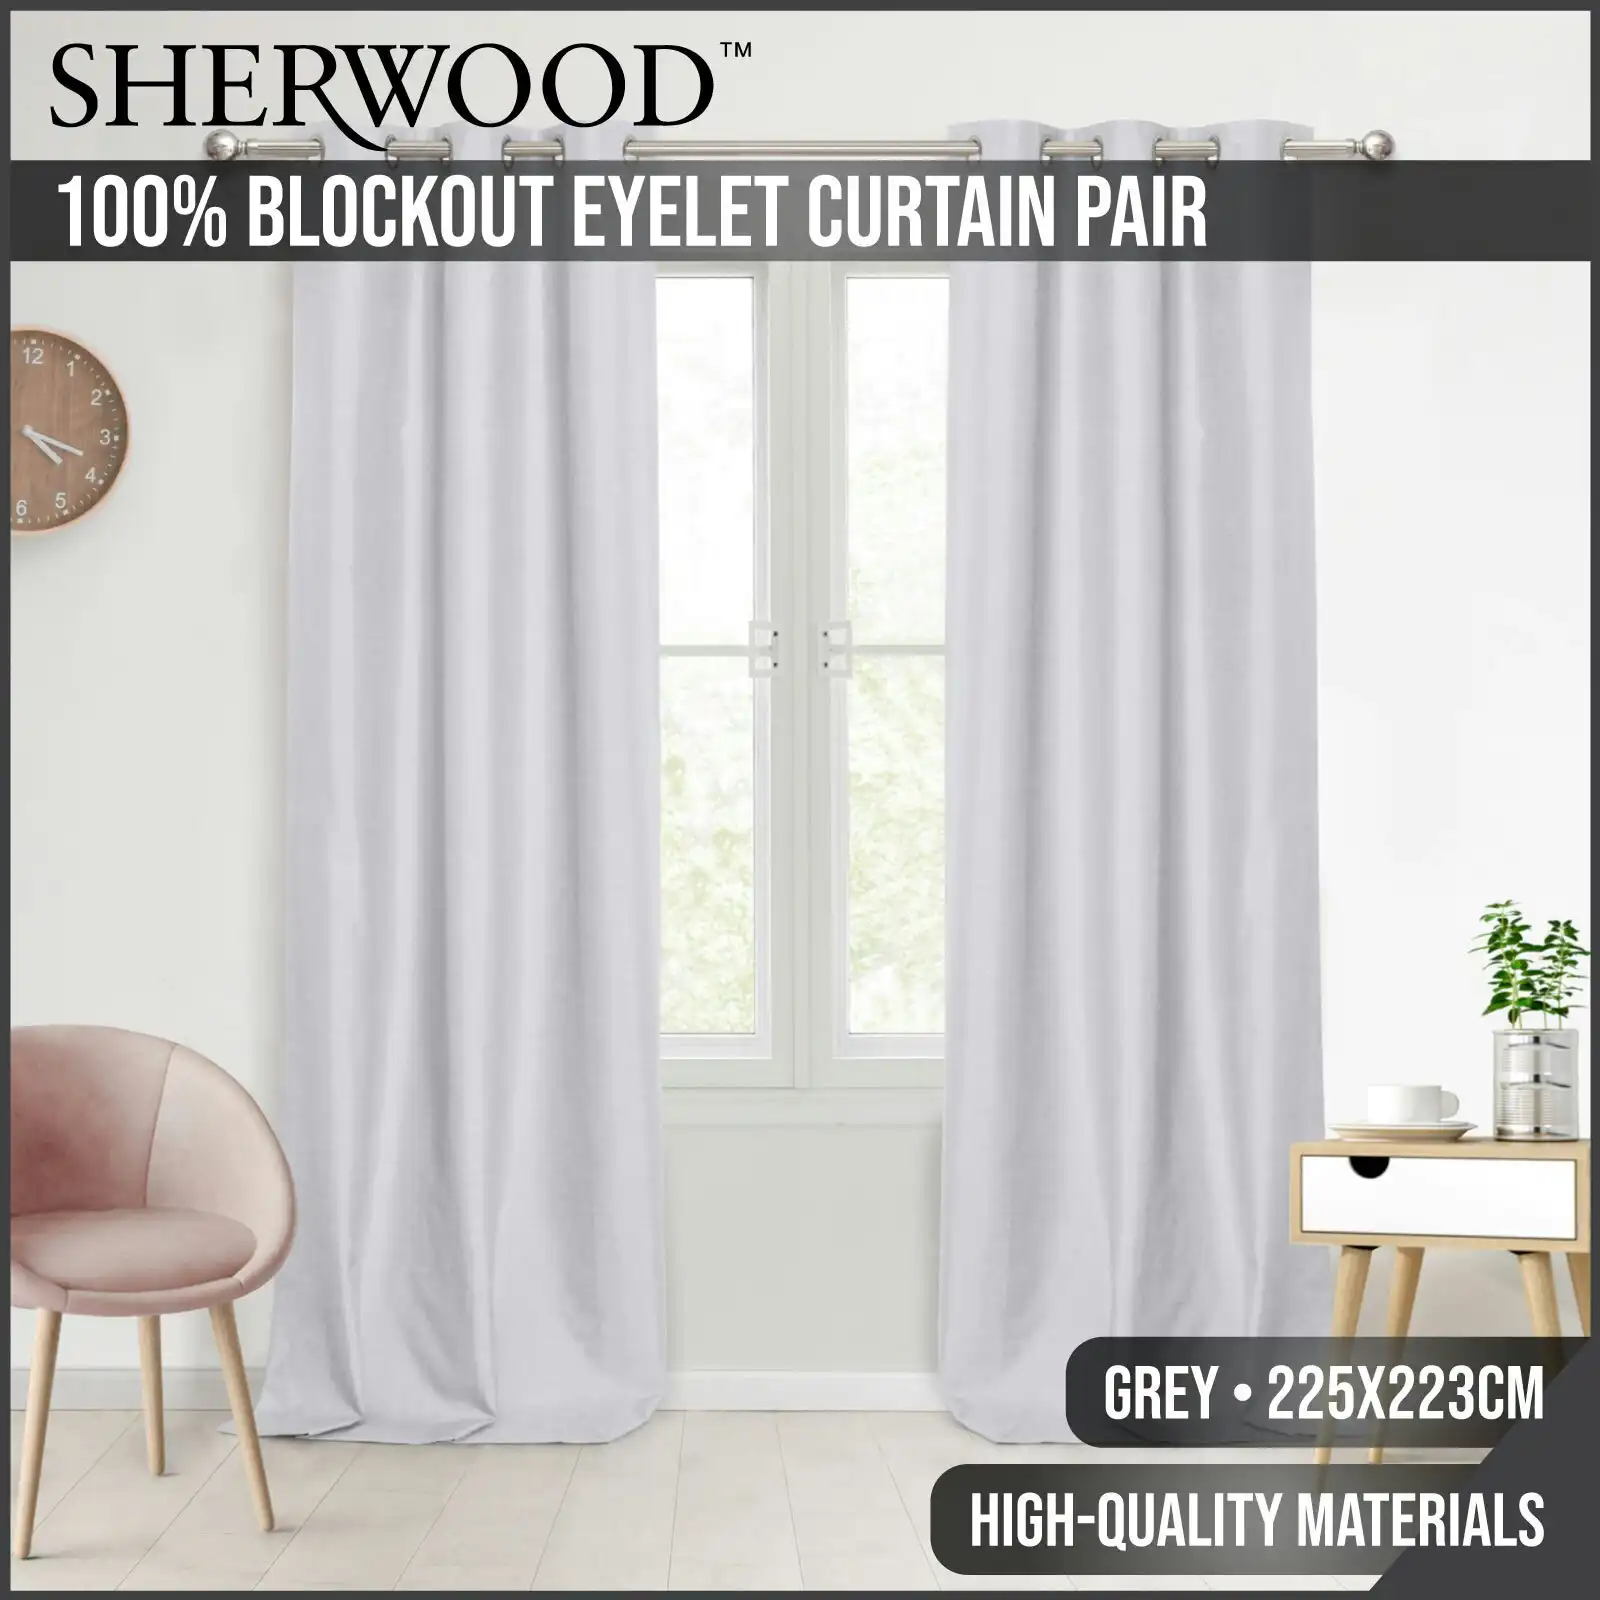 Sherwood Home Faux Linen 100% Blockout Eyelet Curtain Pair Grey 225x223cm